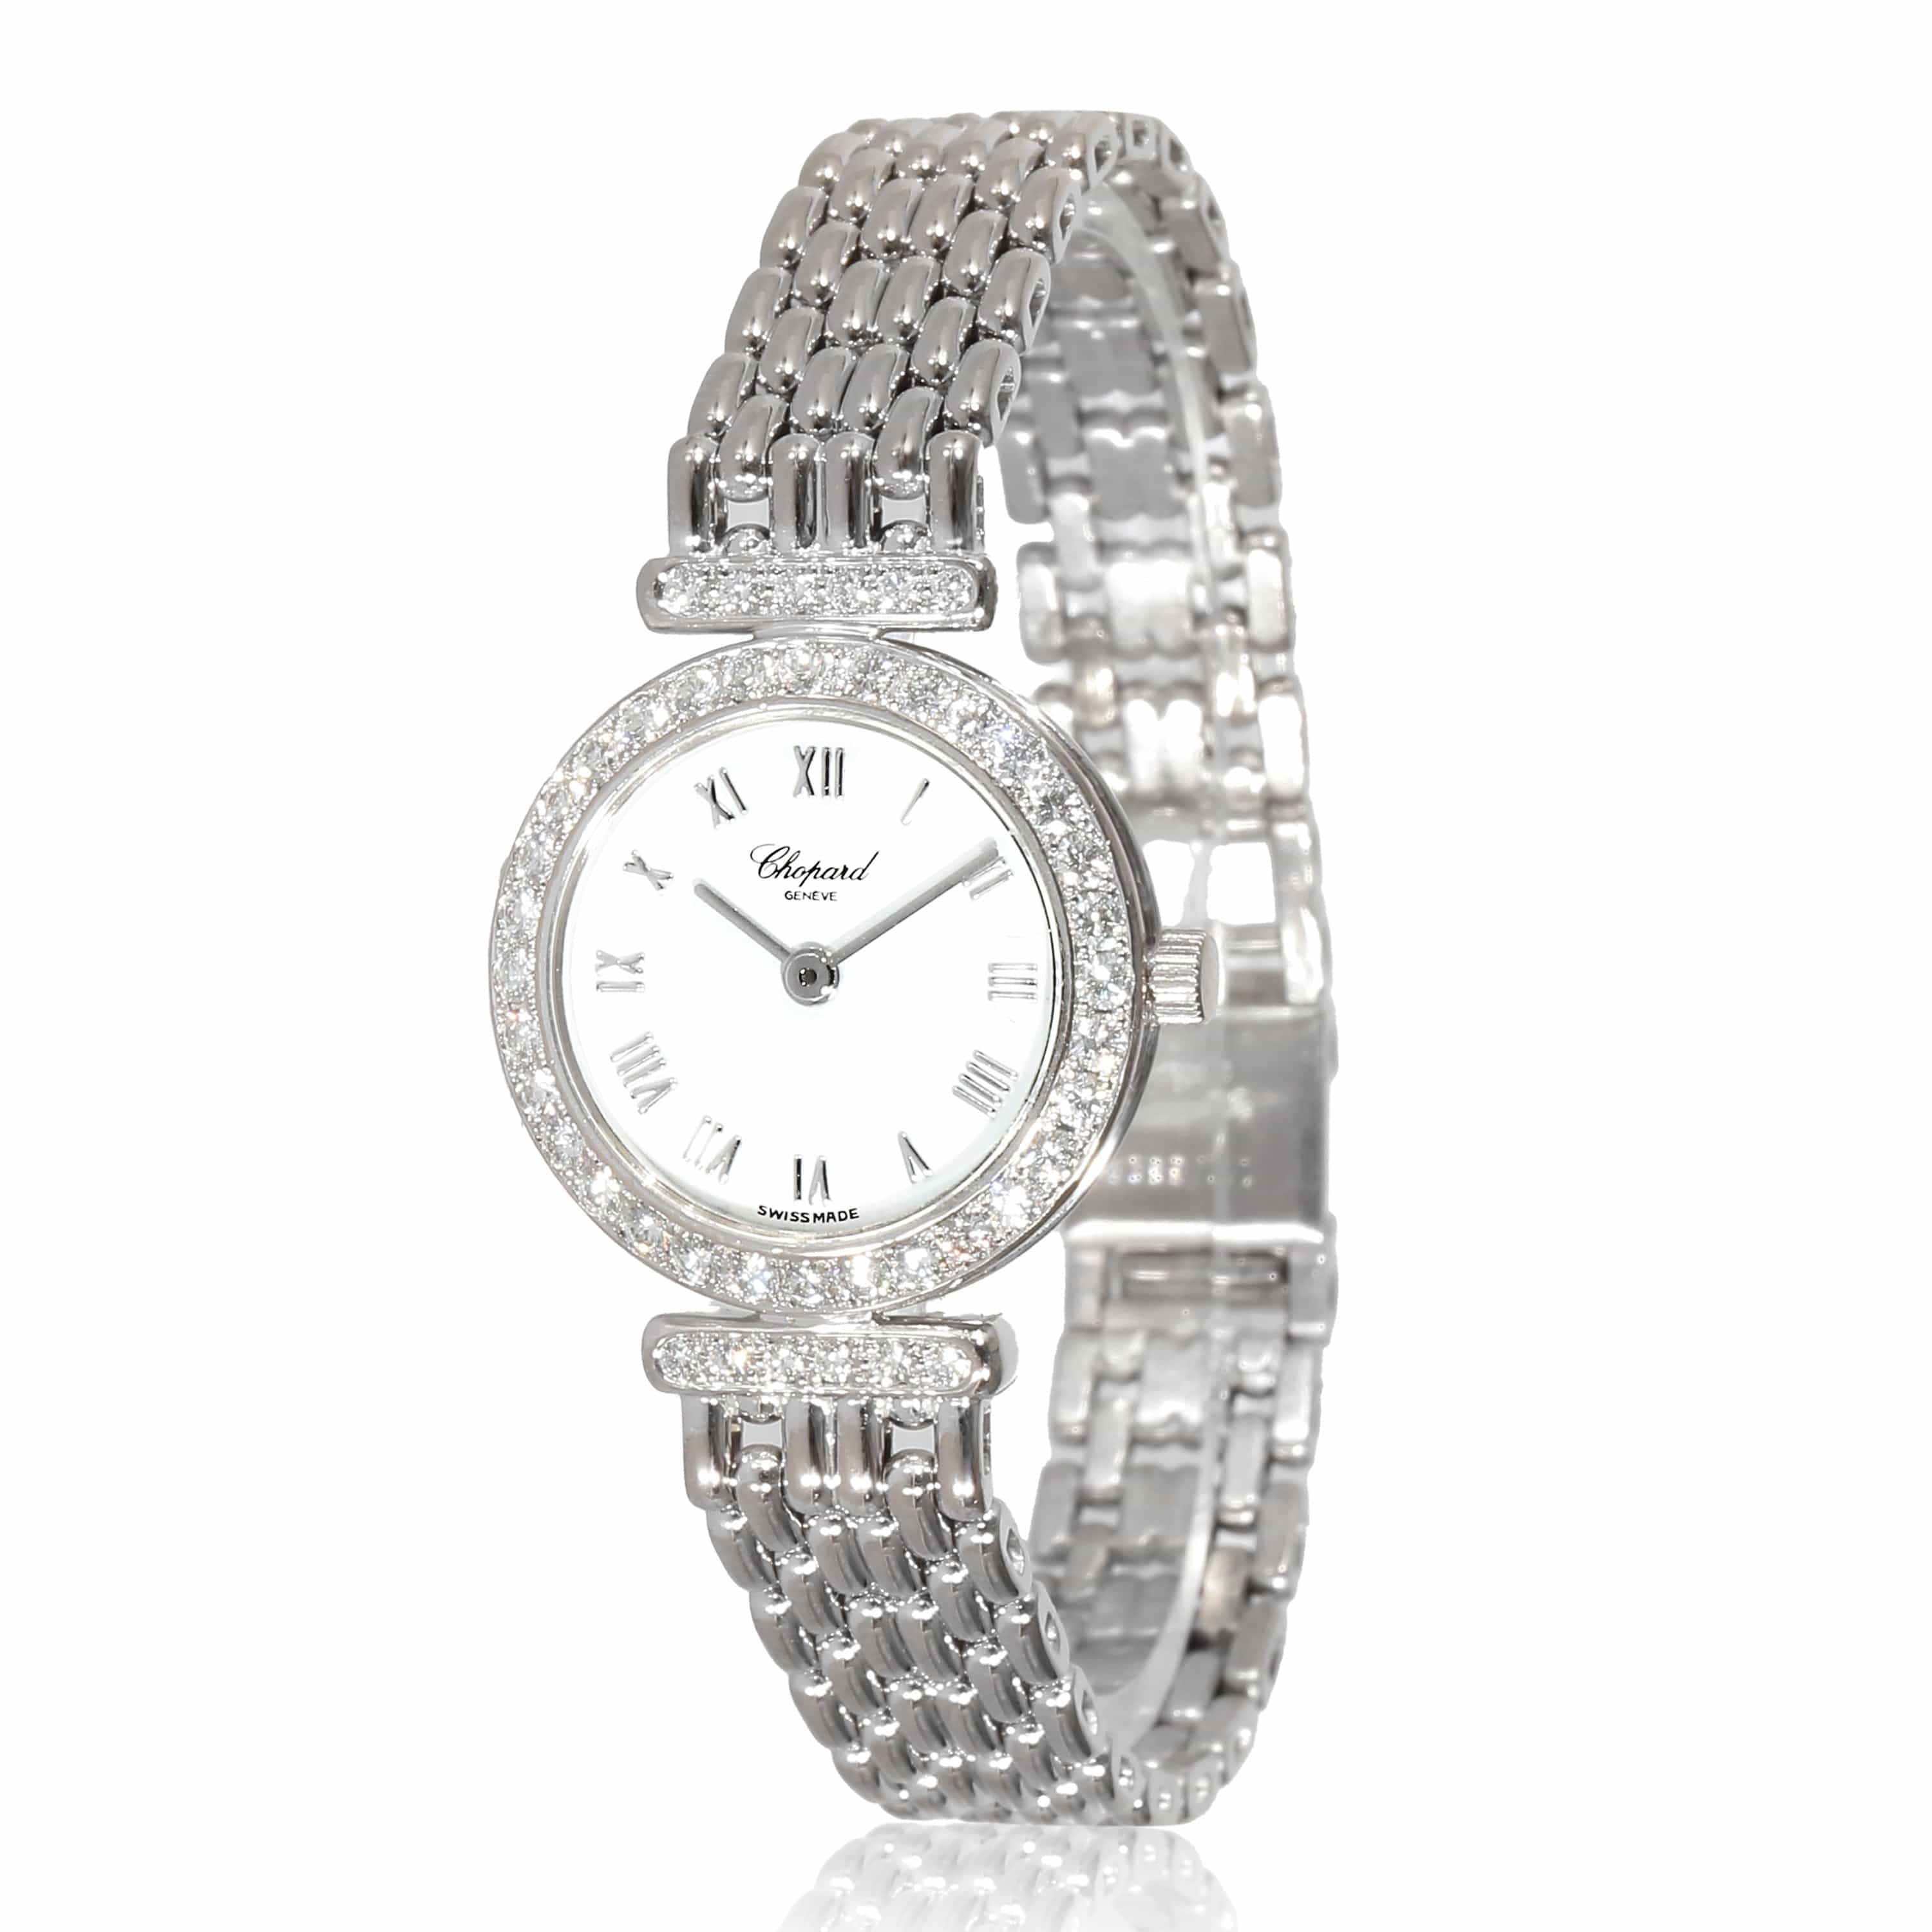 Chopard Chopard Classic 105895-1001 Women's Watch in 18kt White Gold